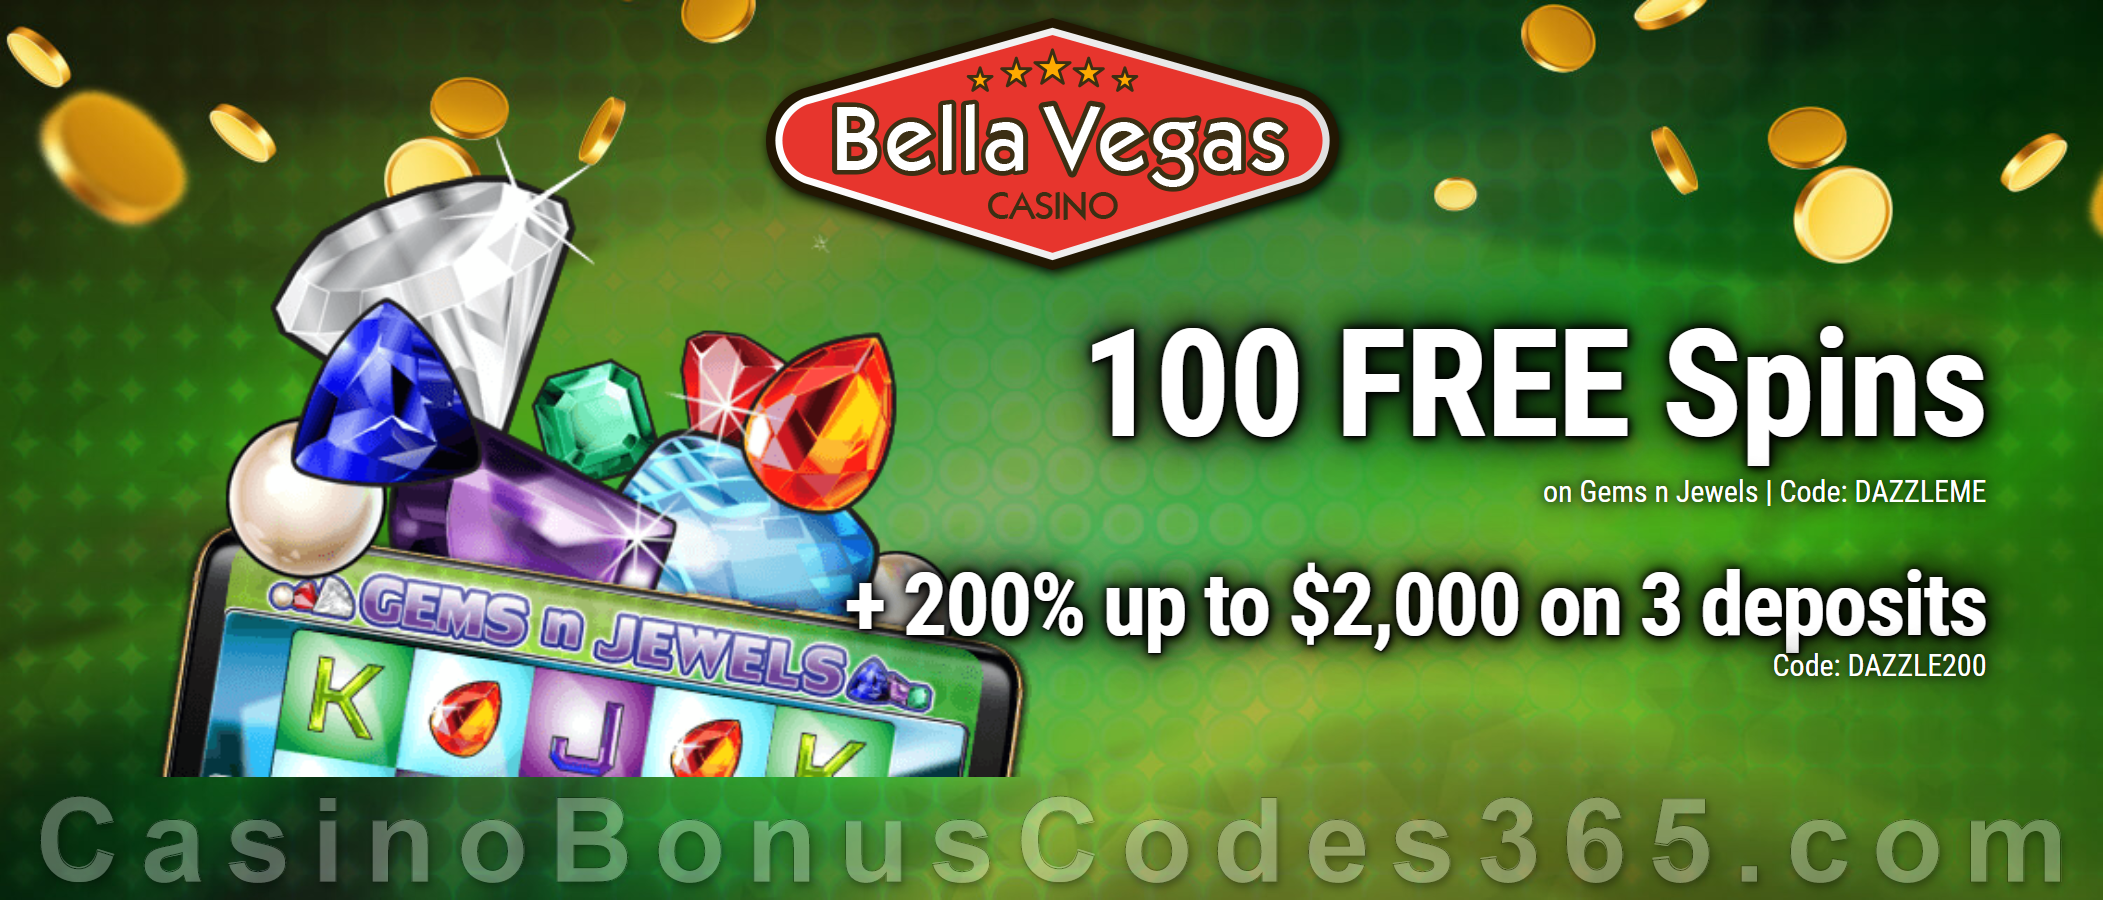 Bella Vegas No Deposit Bonus Codes 2020